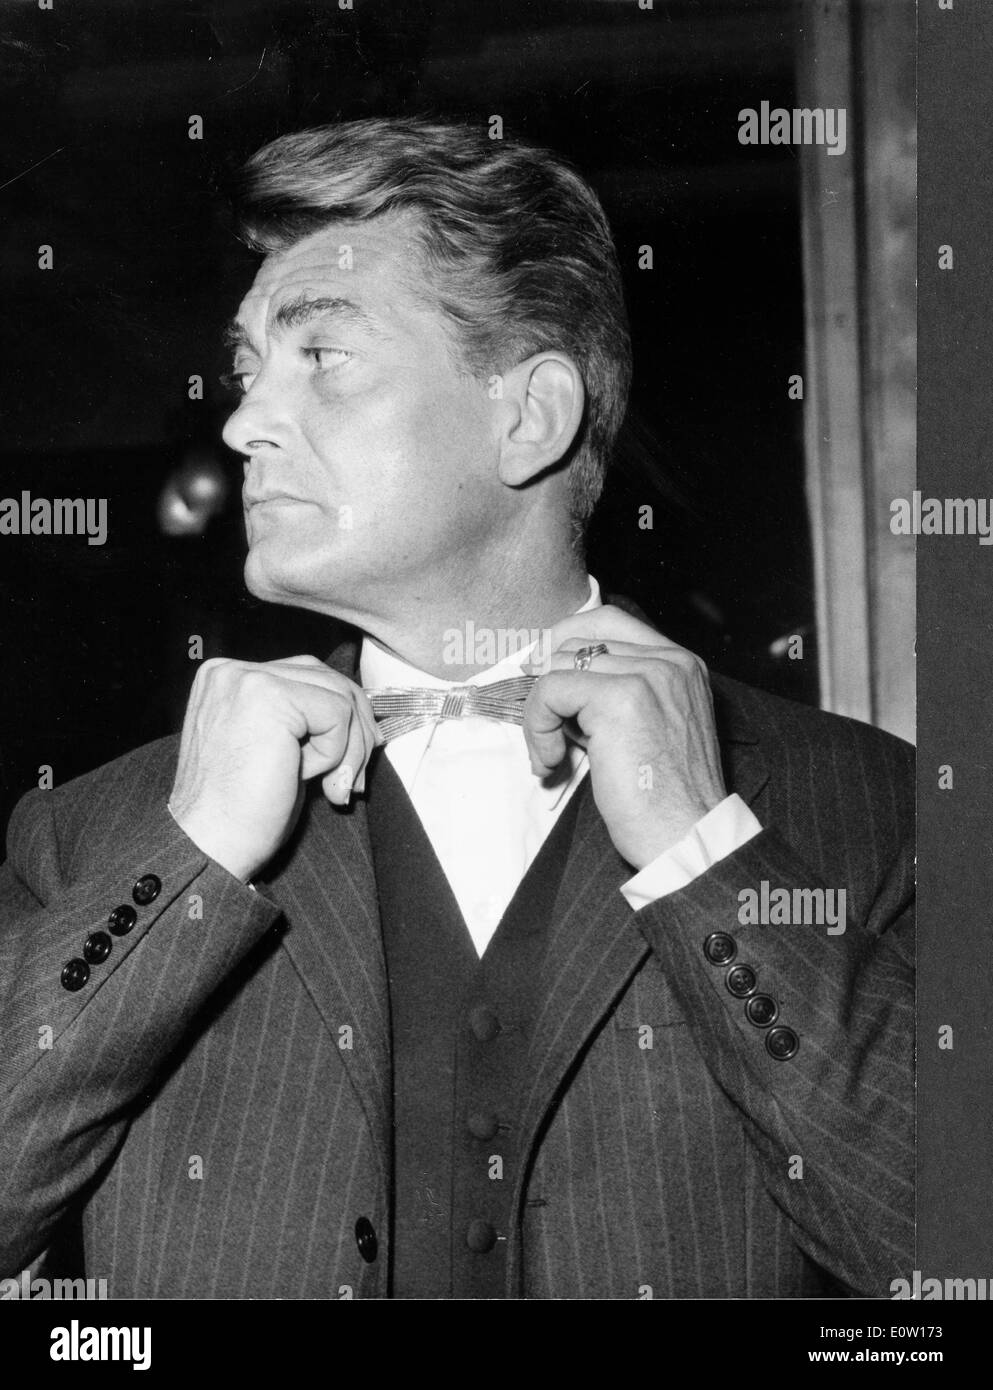 Actor Jean Marais straightening his tie Stock Photo